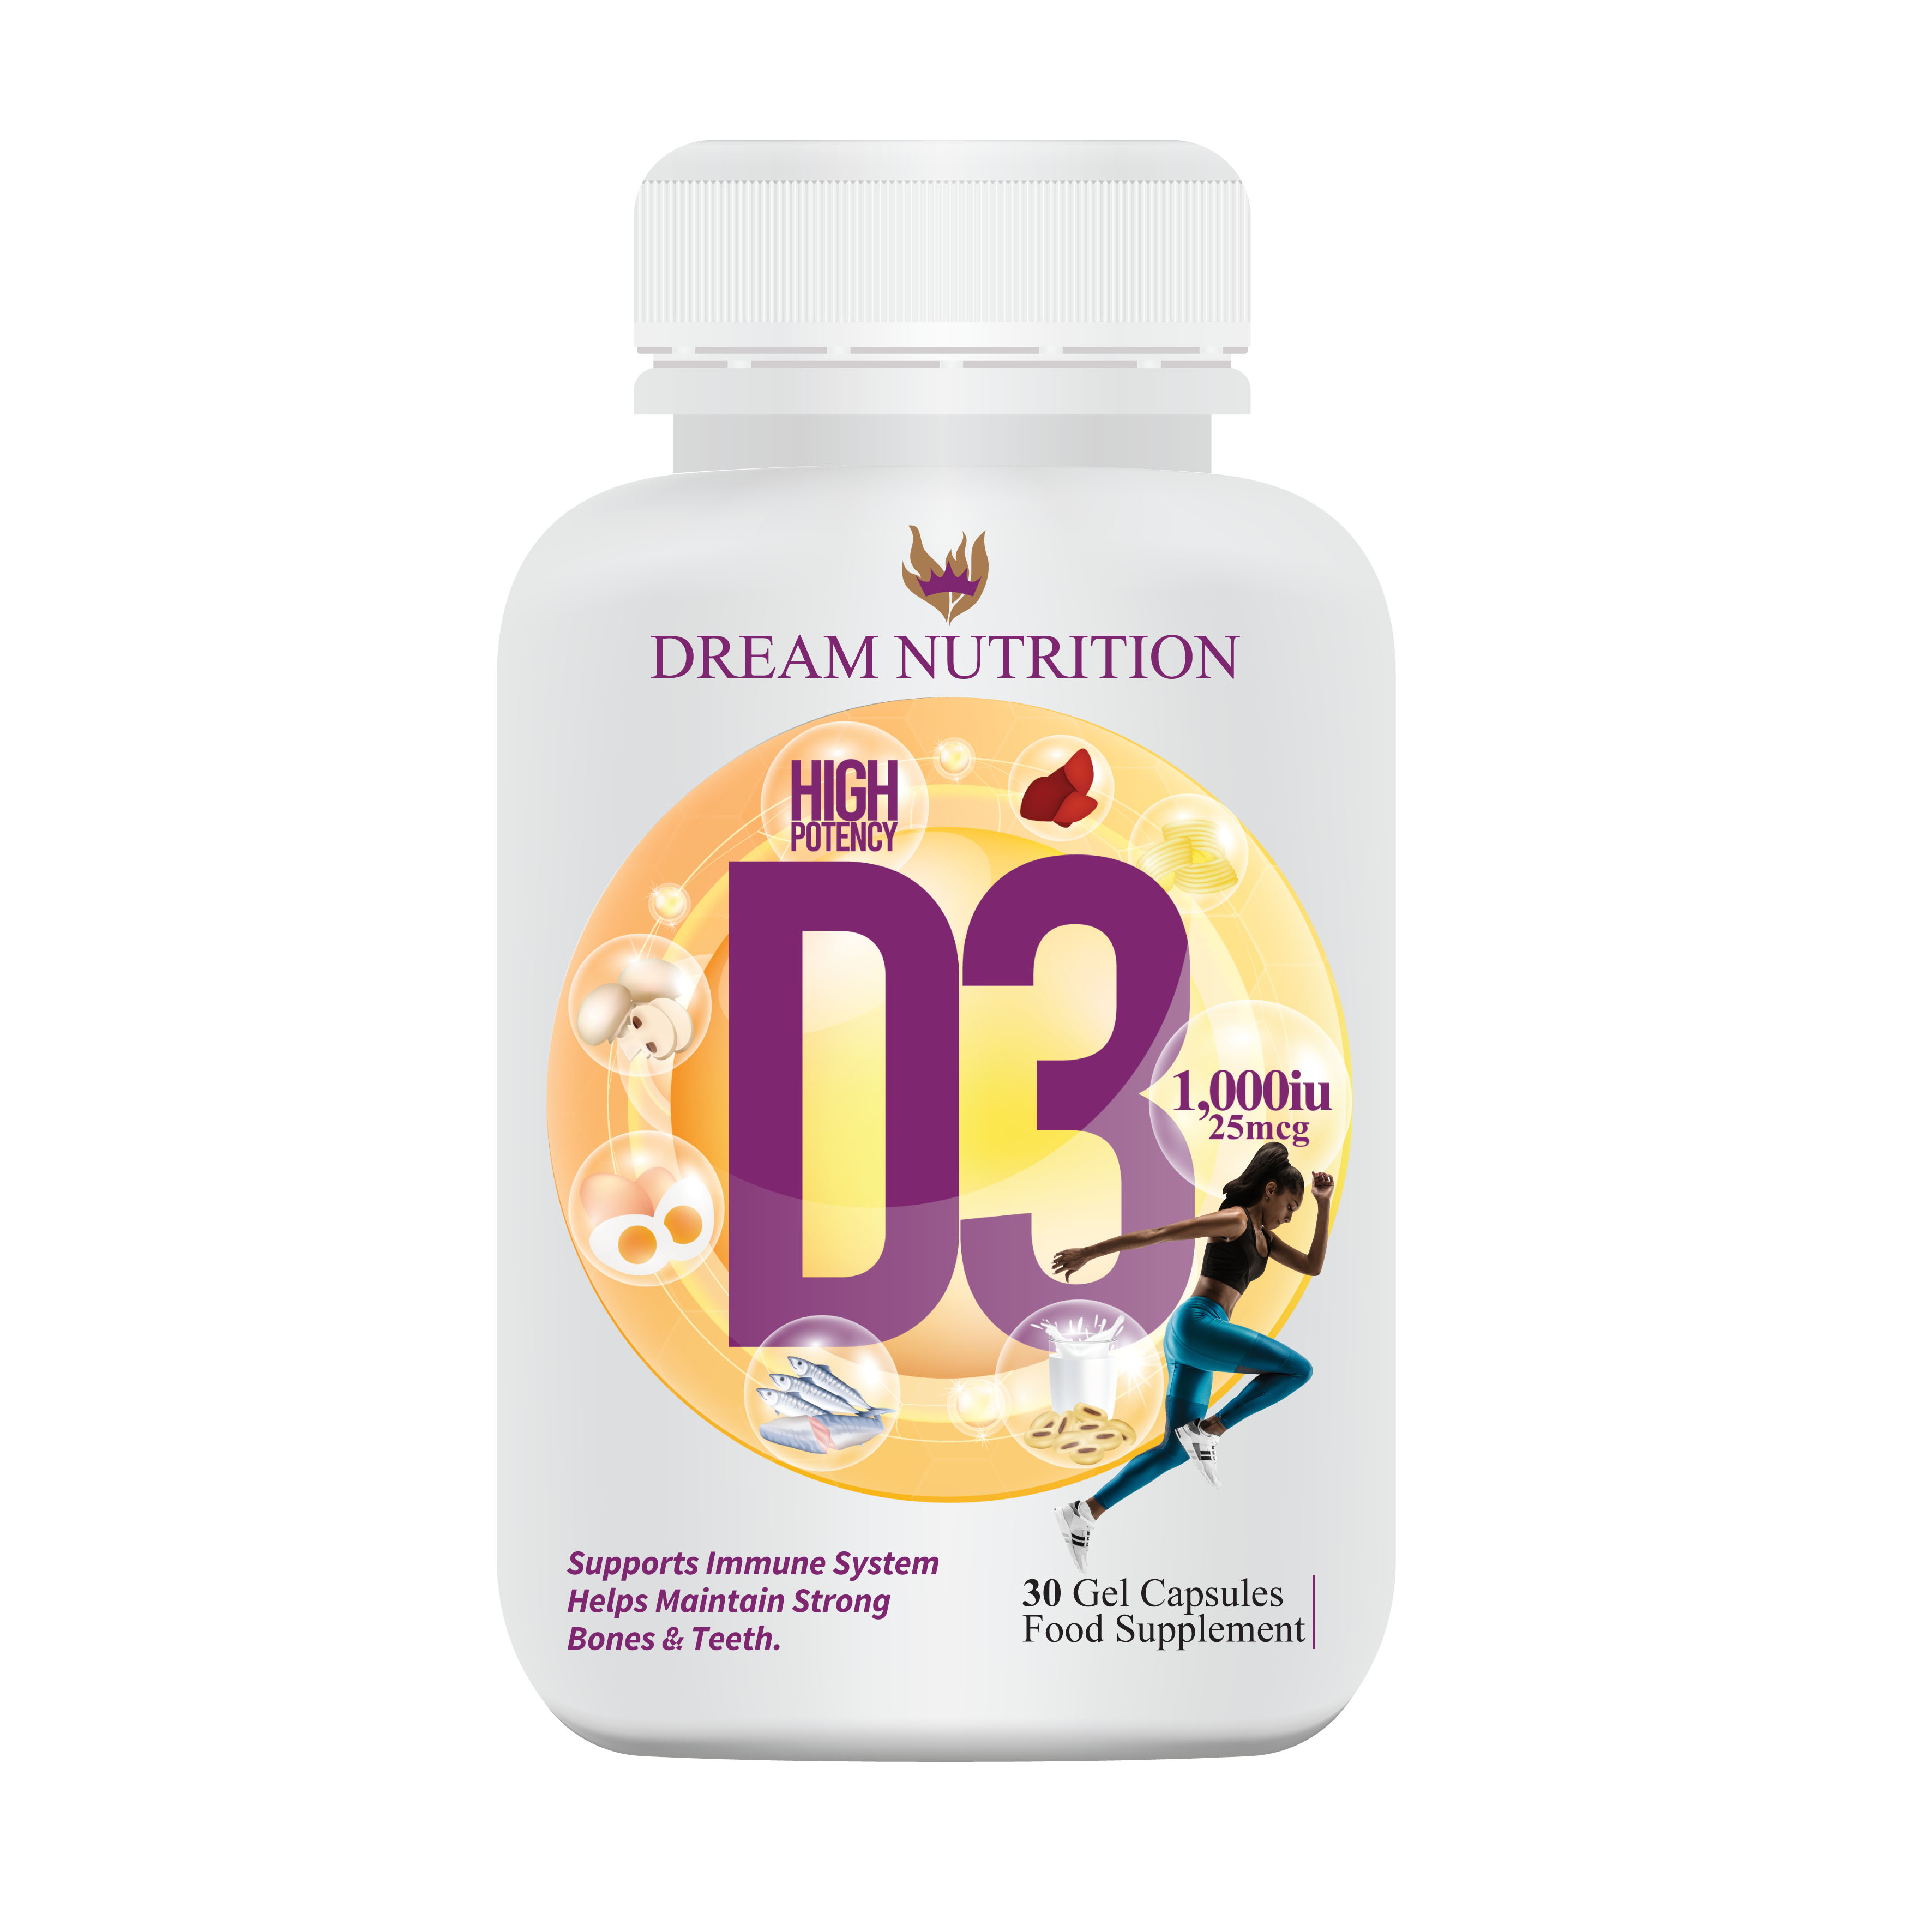 Dream Nutrition Vitamin D3 Gelatine Capsules from DREAM NUTRITION